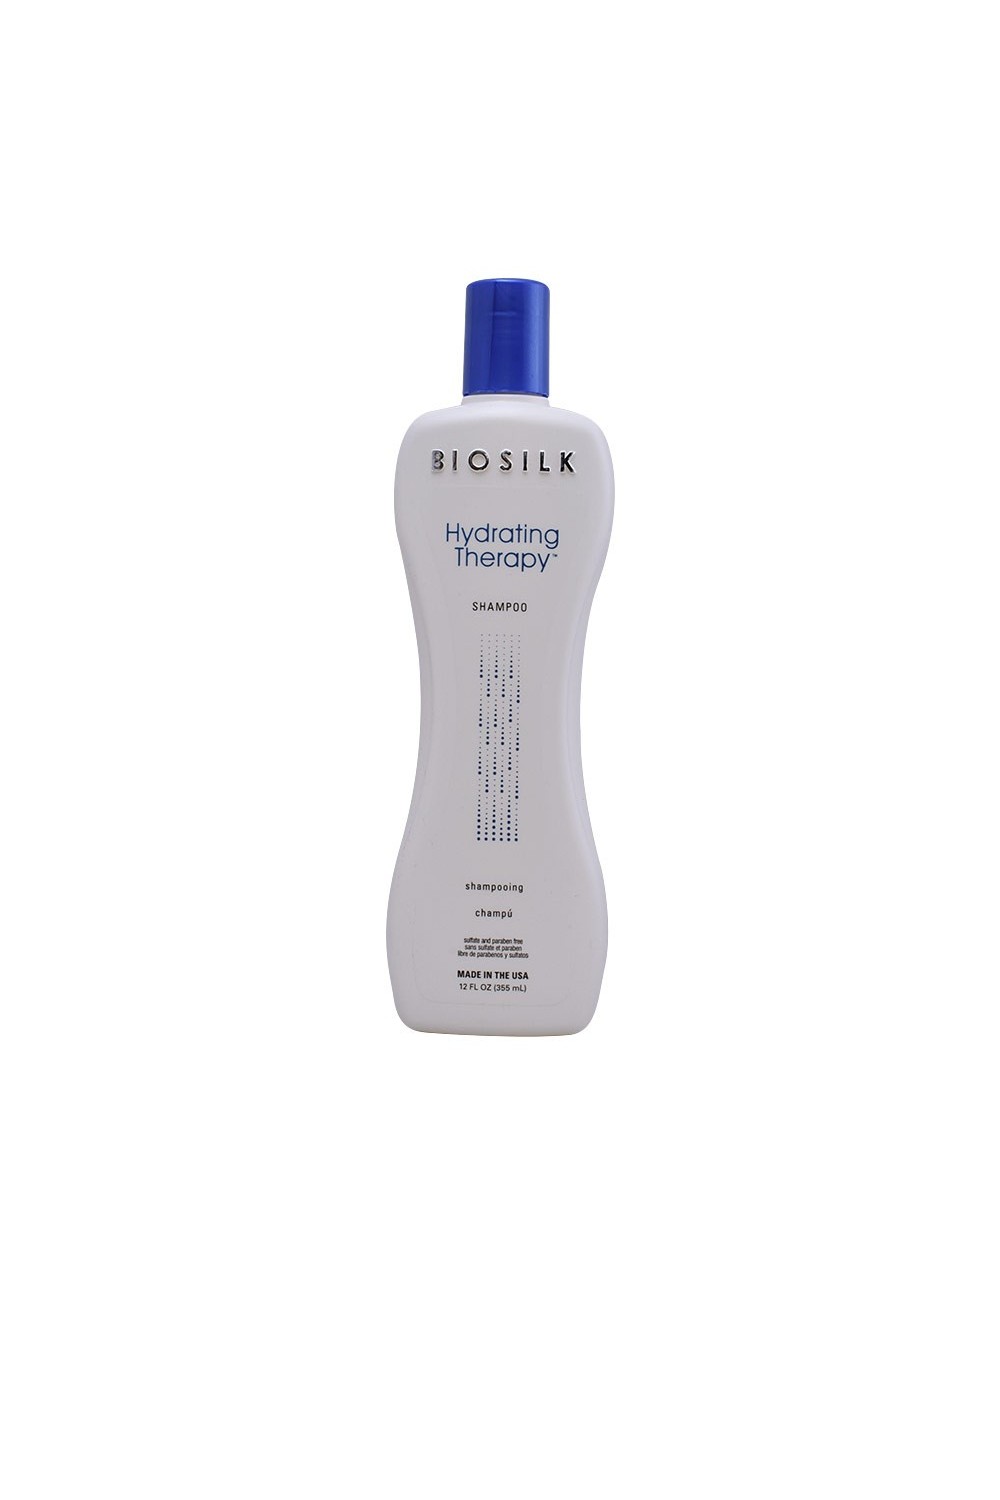 BIOSILK FAROUK - Biosilk Hydrating Therapy Shampoo 355ml